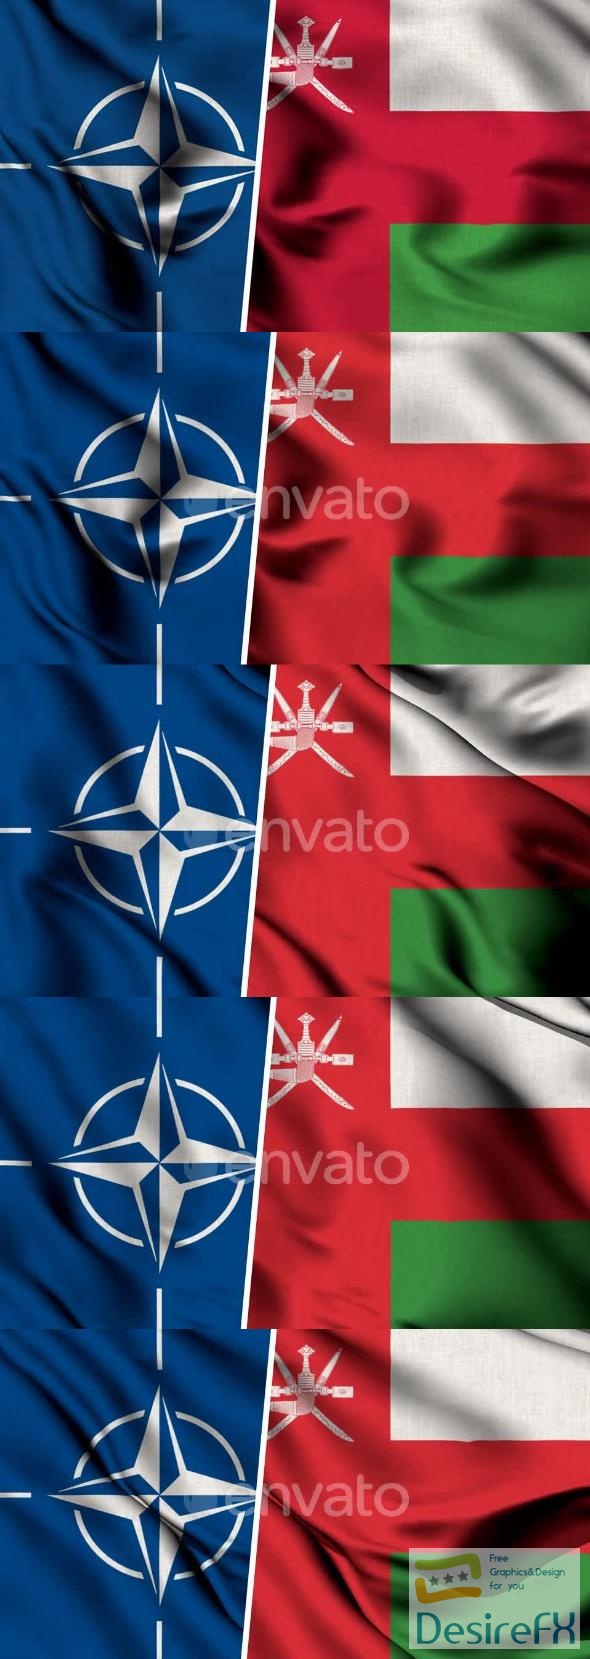 VideoHive Nato Flag And Flag Of Oman 47577937